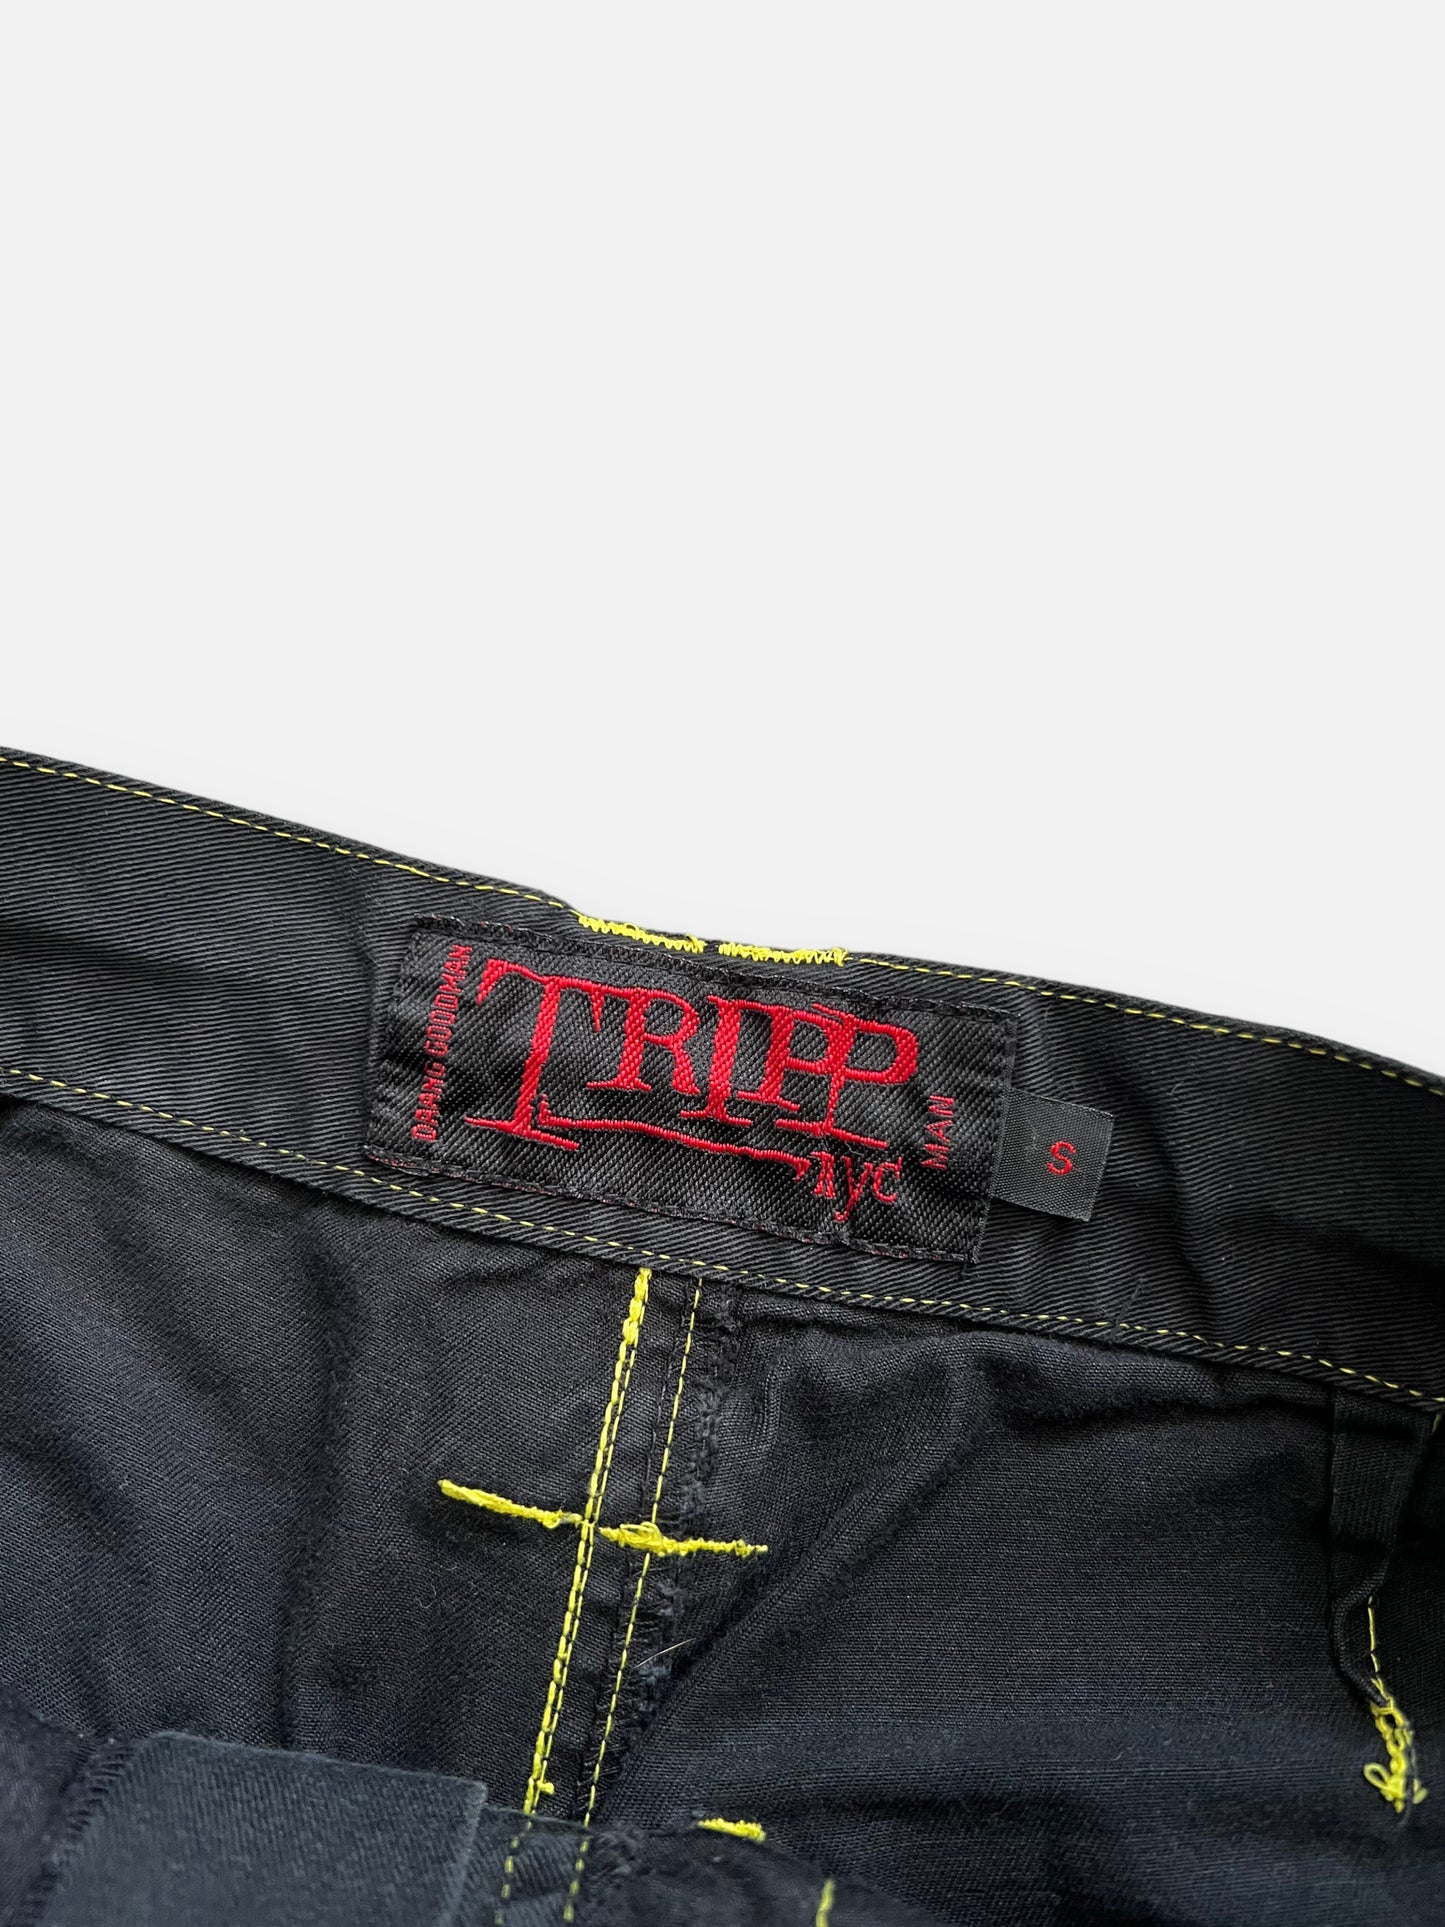 90s Tripp NYC Pants (30x29)